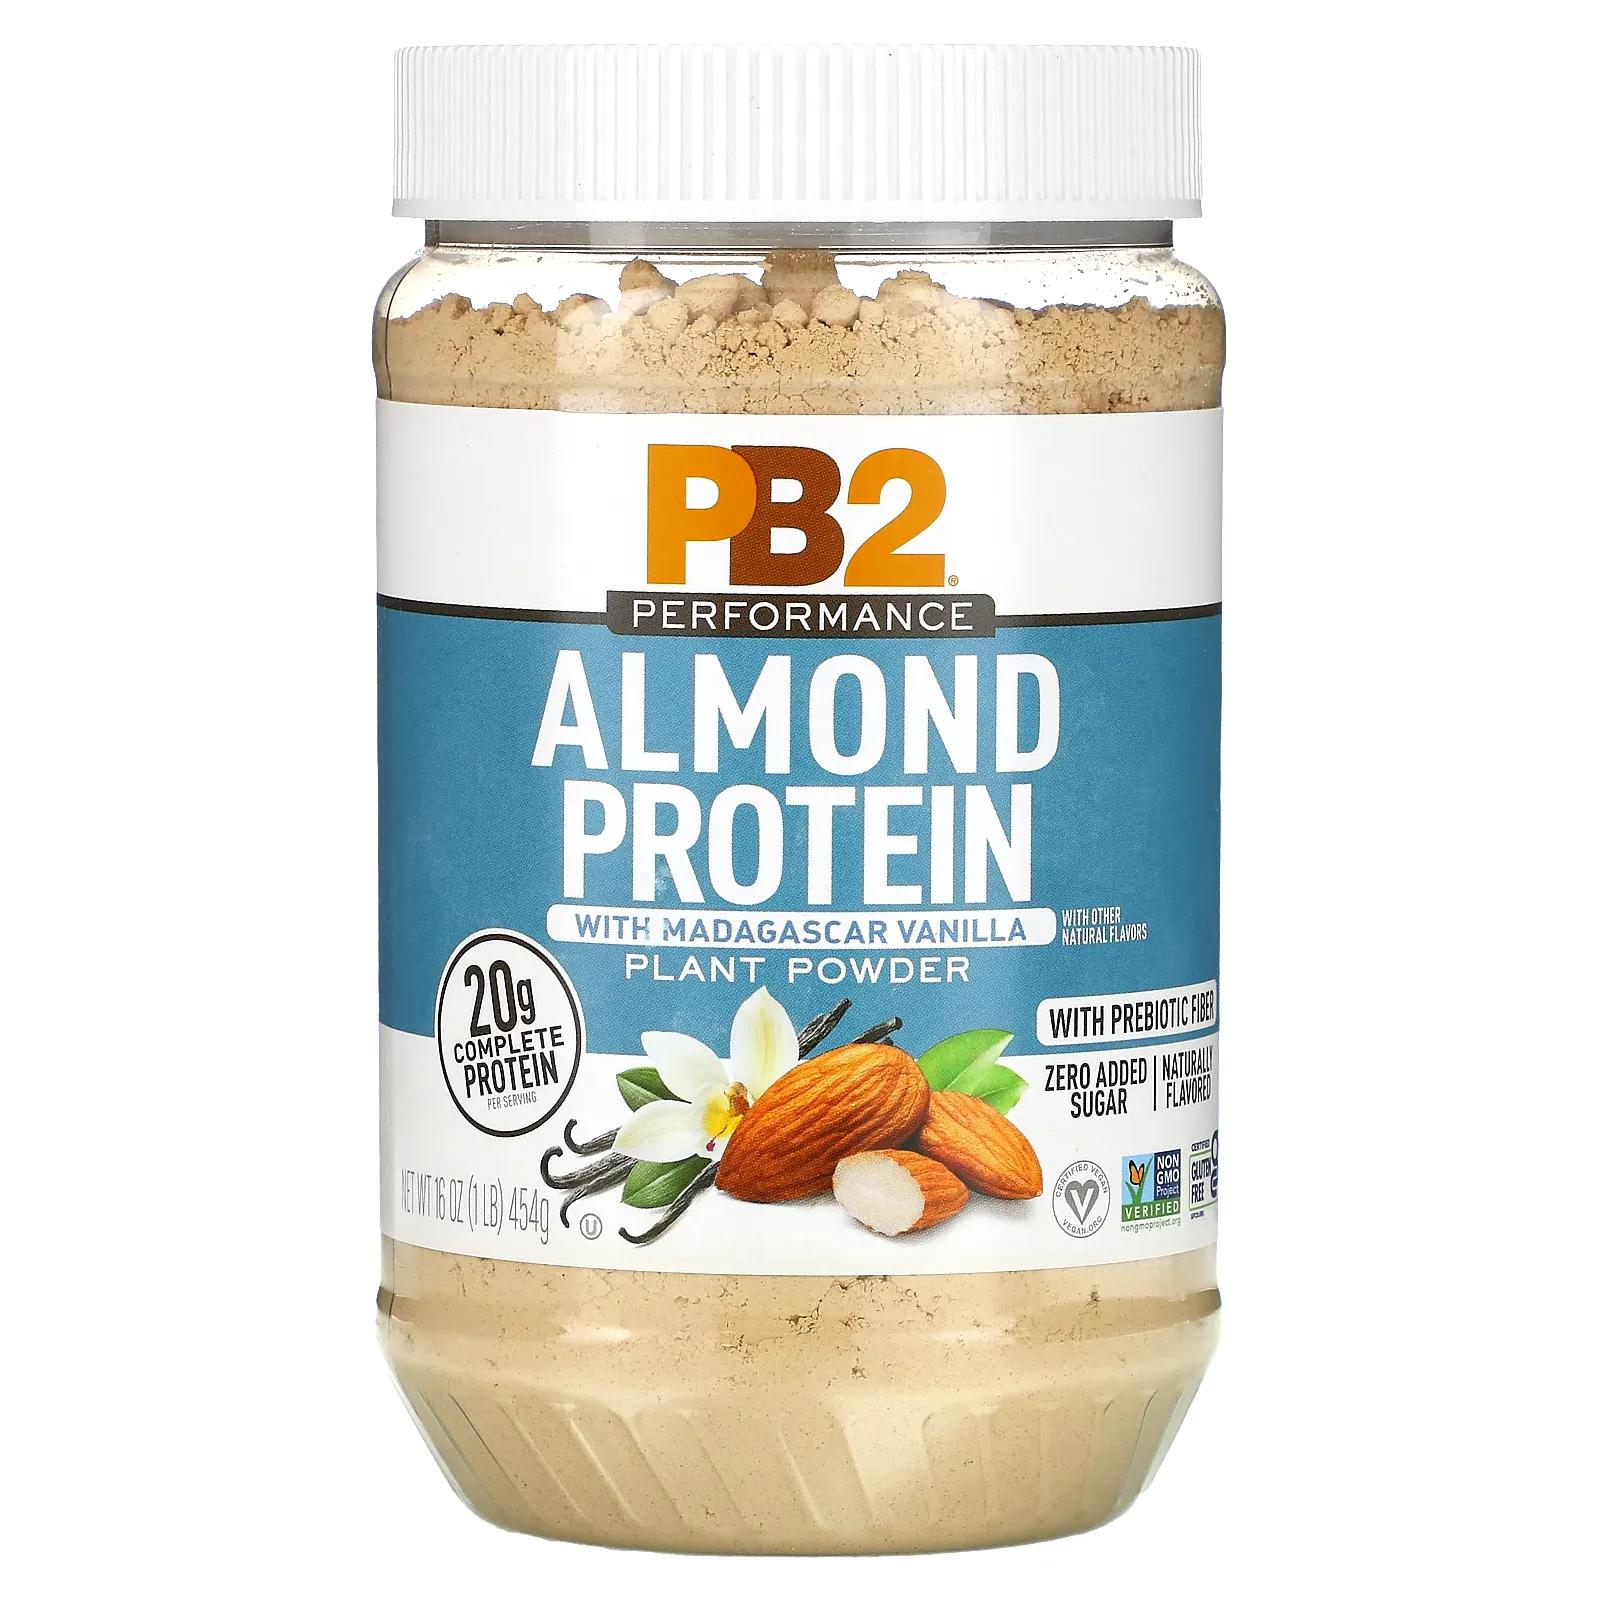 PB2 Foods Almond Protein with Madagascar Vanilla 16 oz (454 g) цена и фото